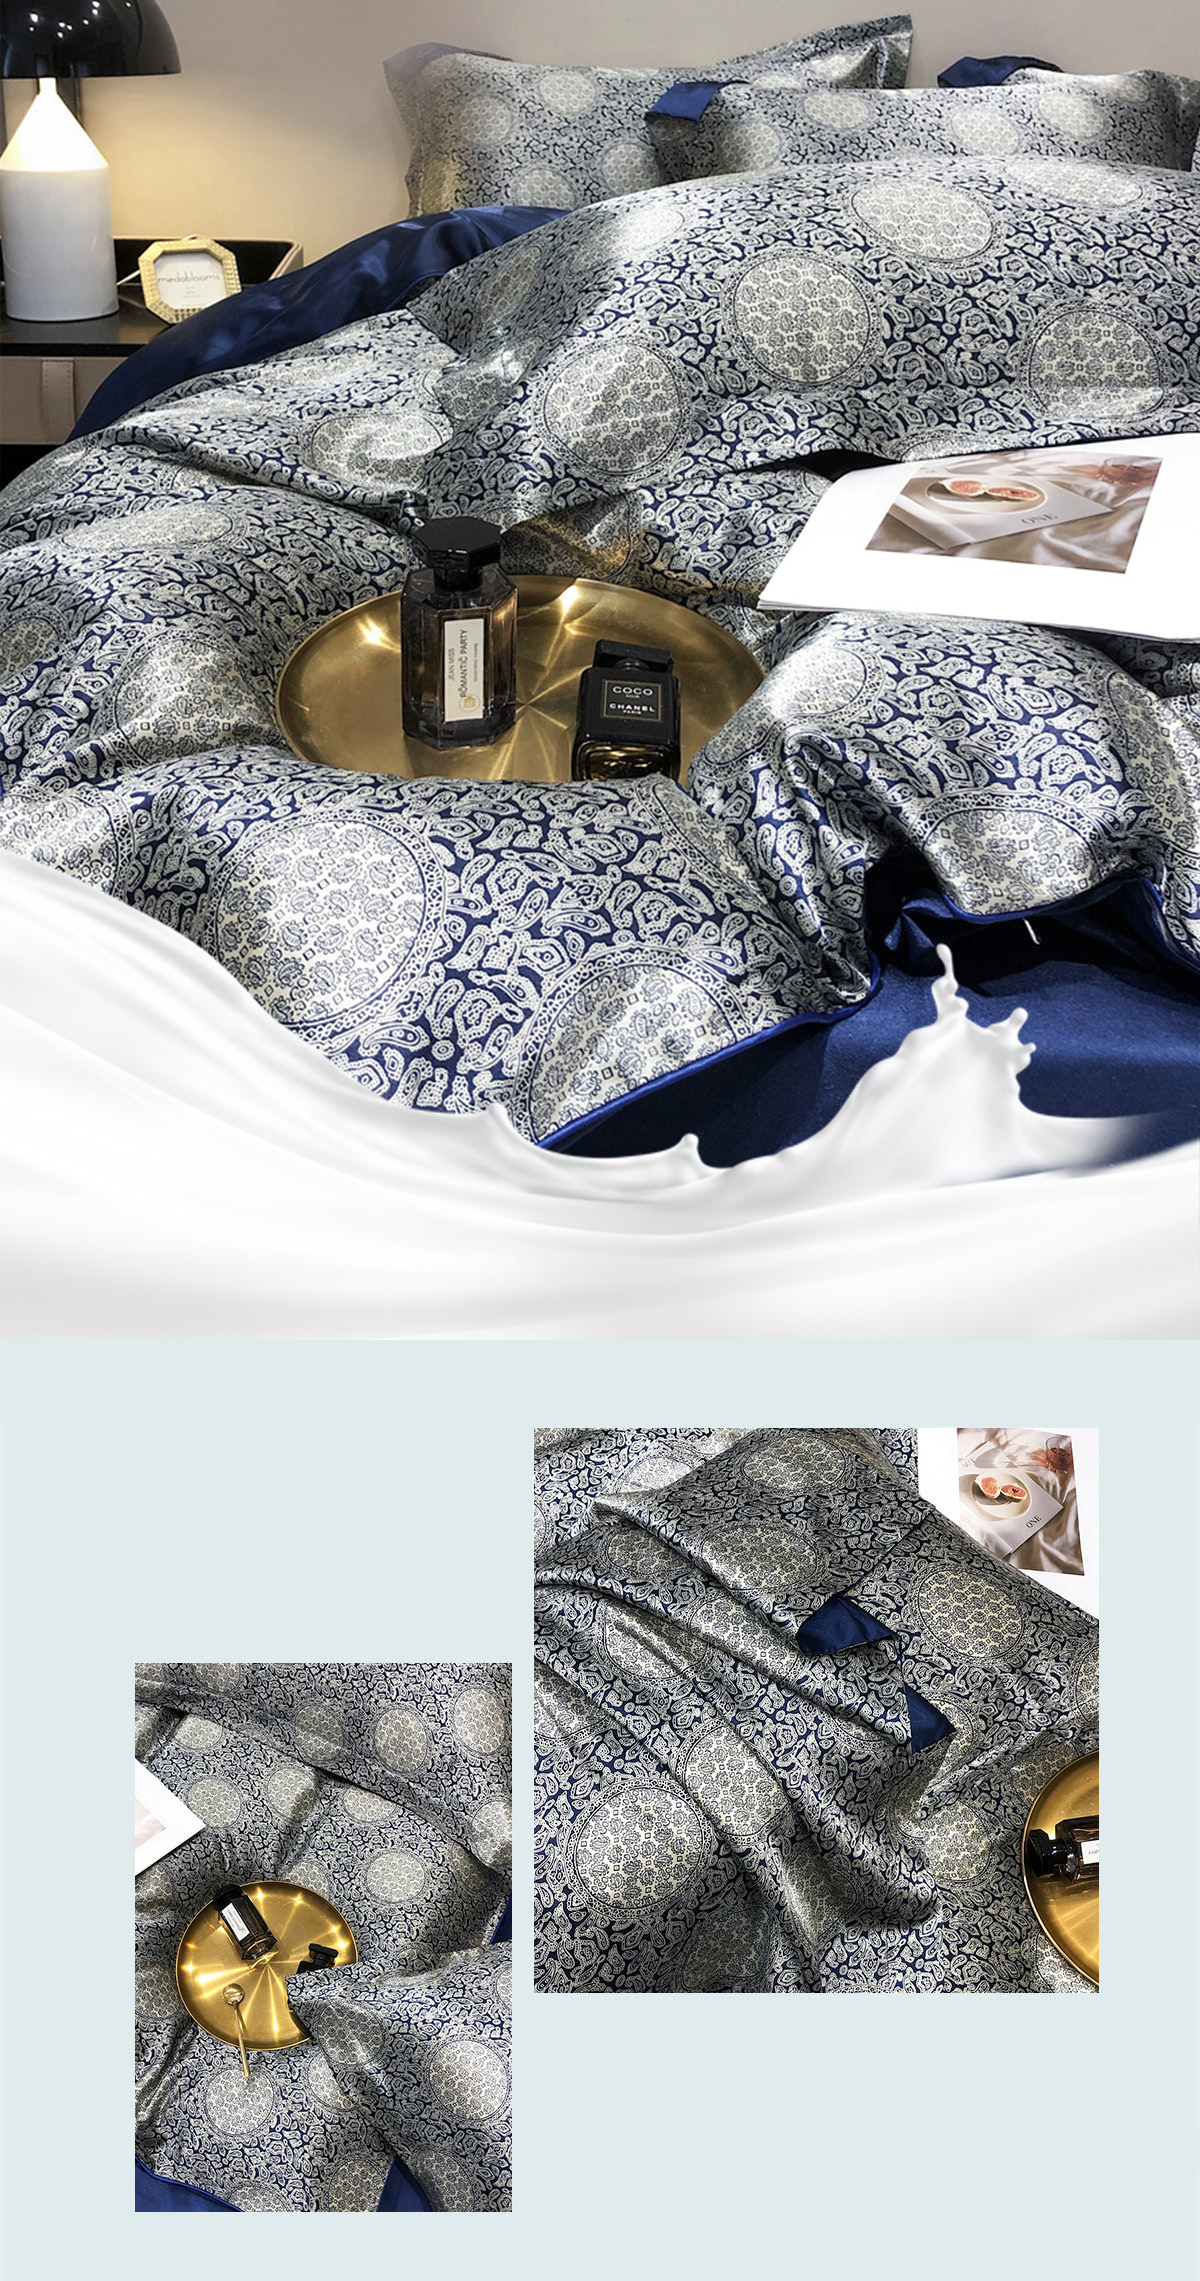 Luxury-Silky-Satin-Duvet-Cover-Flat-Sheet-Pillowcase-4-Piece-Set